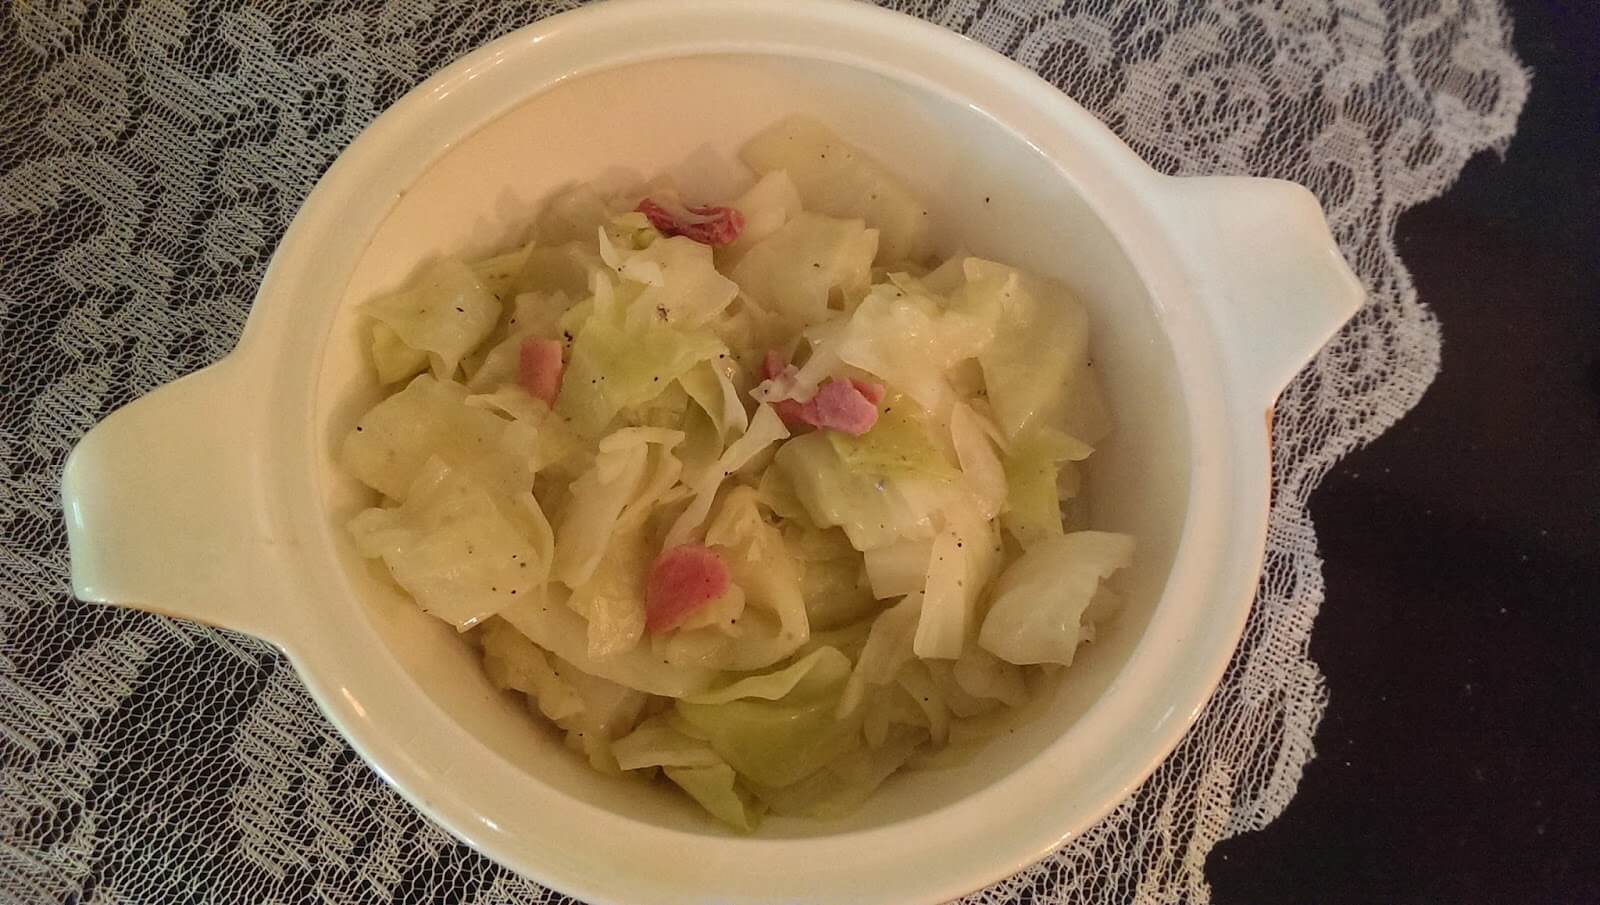 Classic boiled cabbage recipe